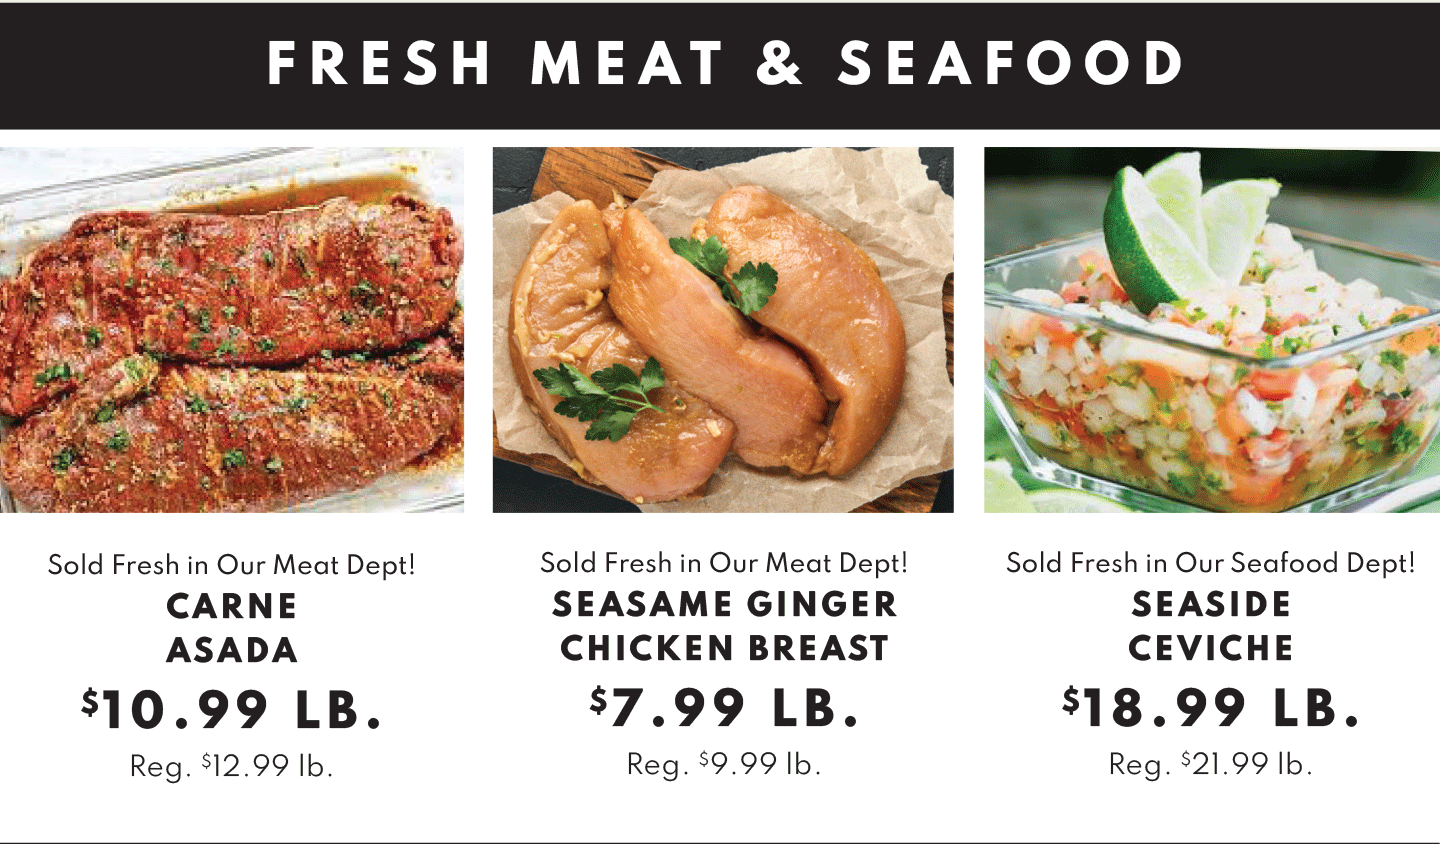 Carne Asada $10.99 lb, Seasame Ginger Chicken Breast $7.99 lb and Seaside Ceviche $18.99 lb